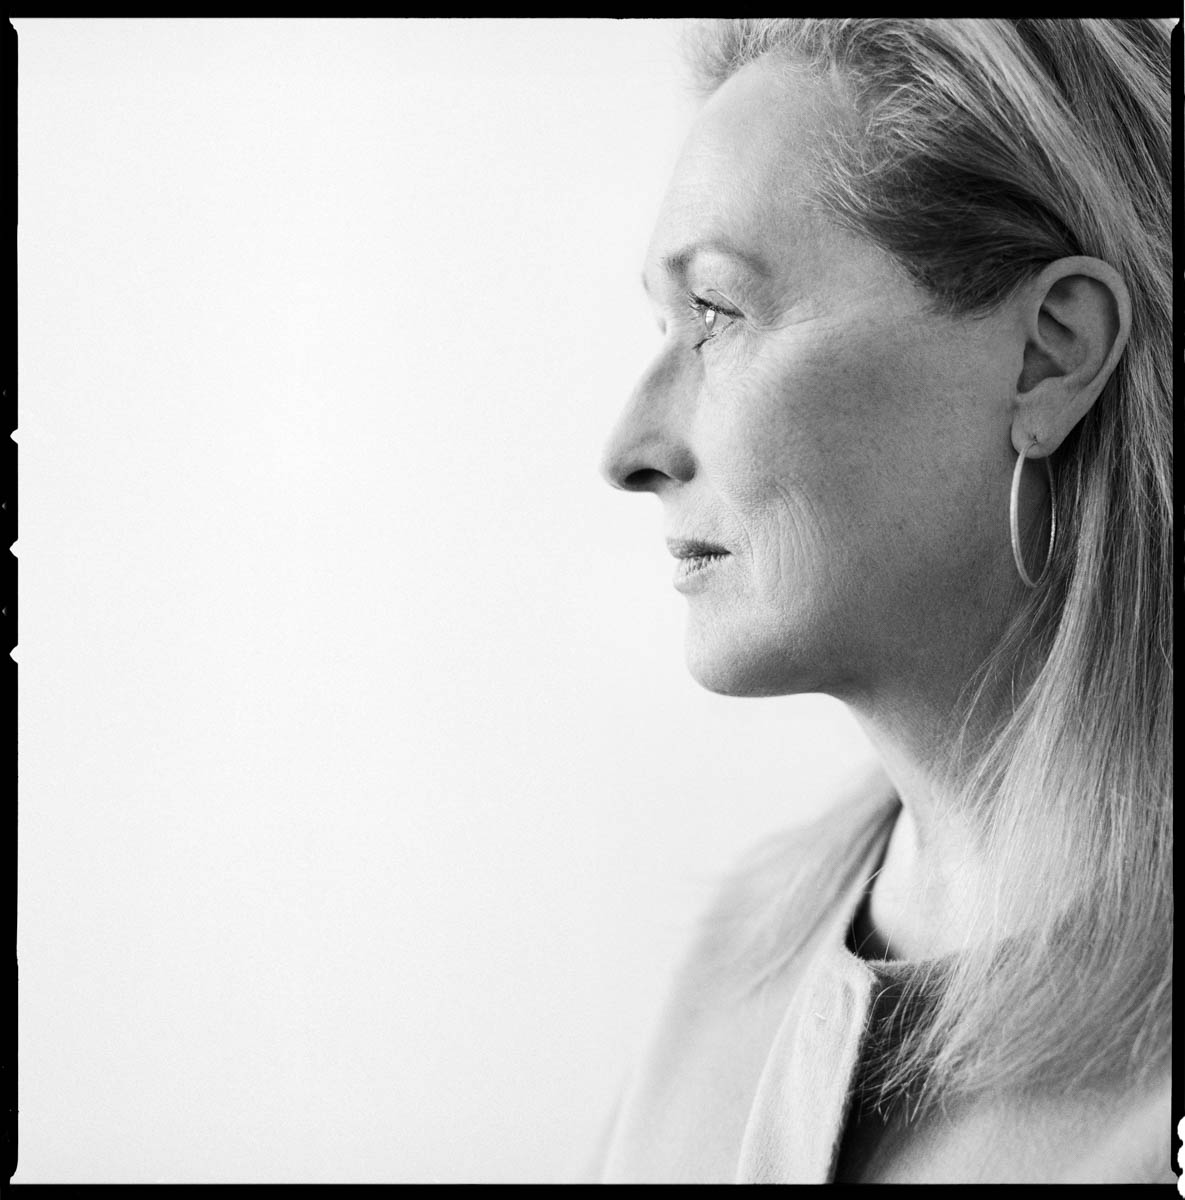 Meryl Streep, Academy Award-winning actor